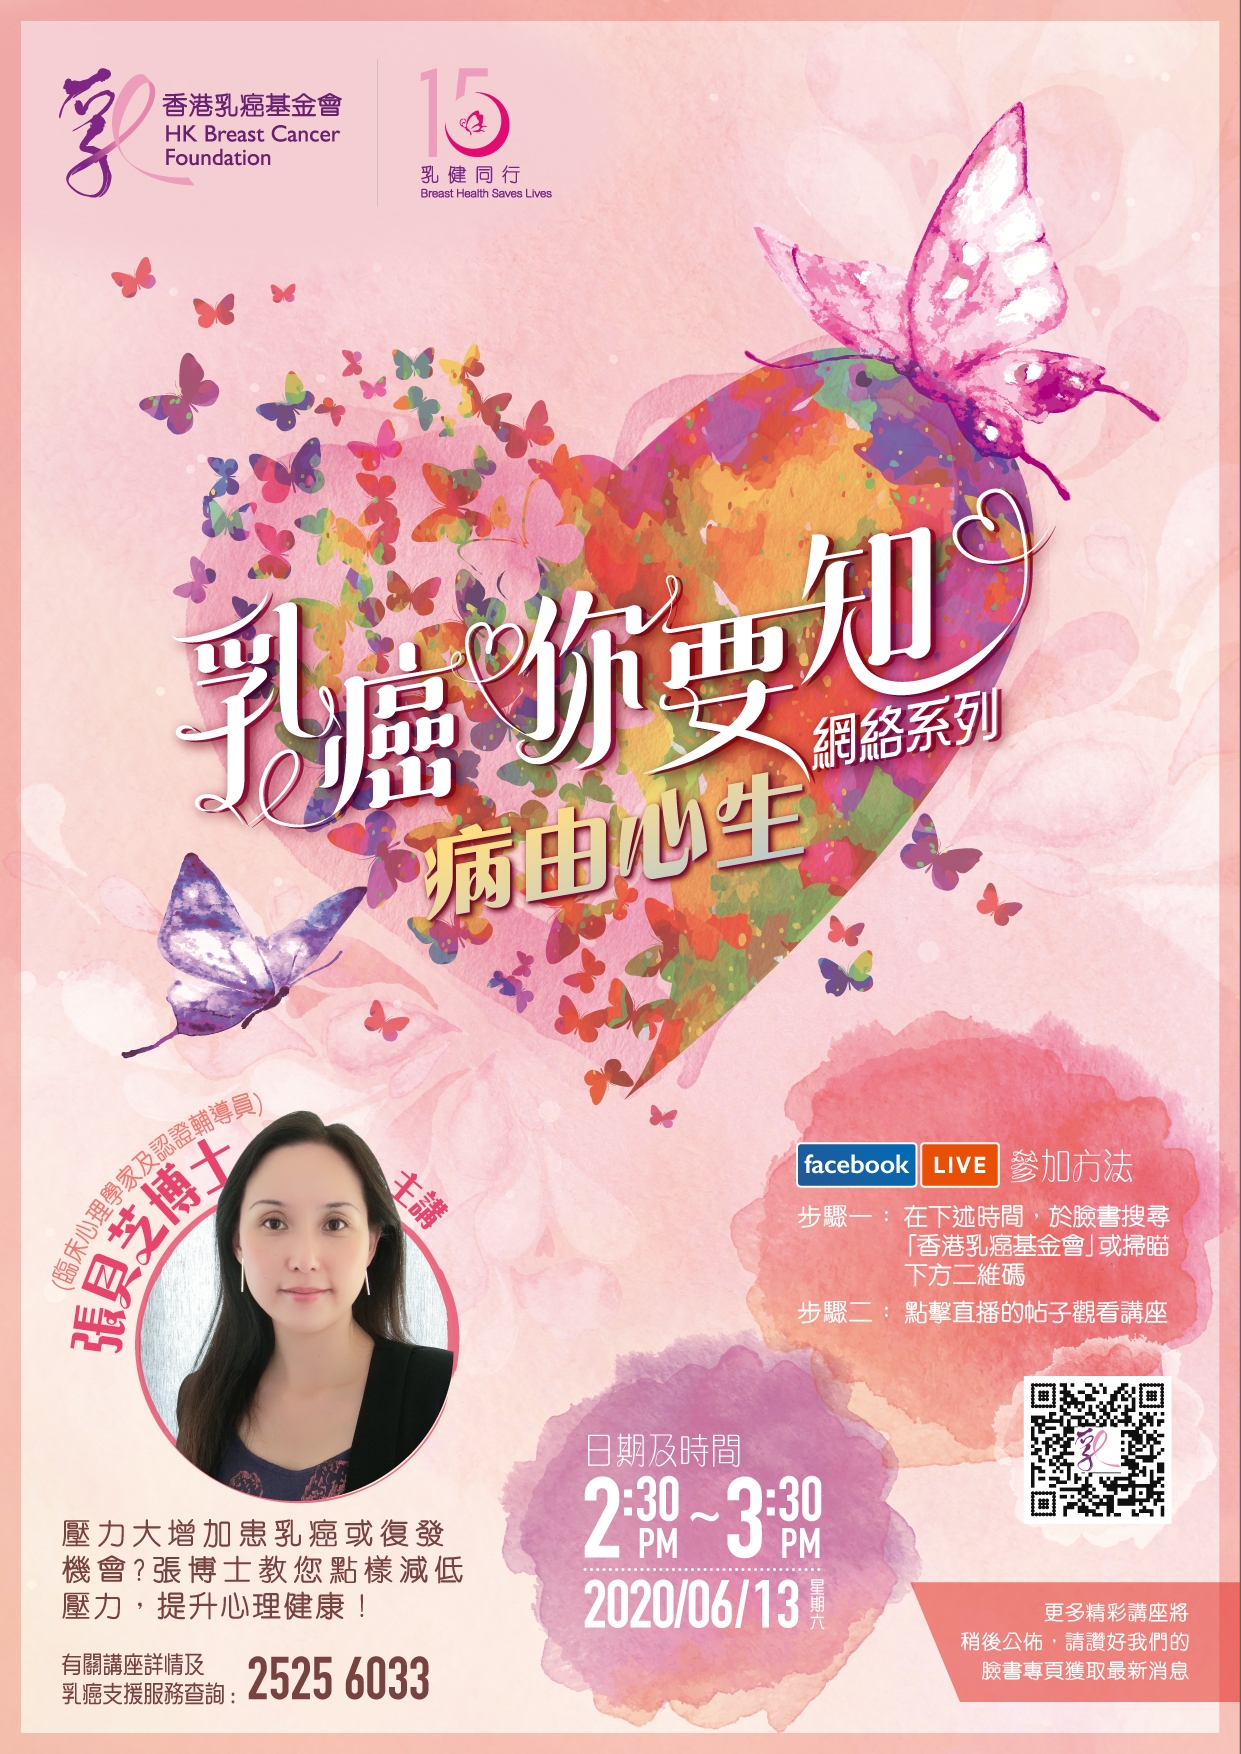 Self Photos / Files - HKBCF_Poster_r1_final